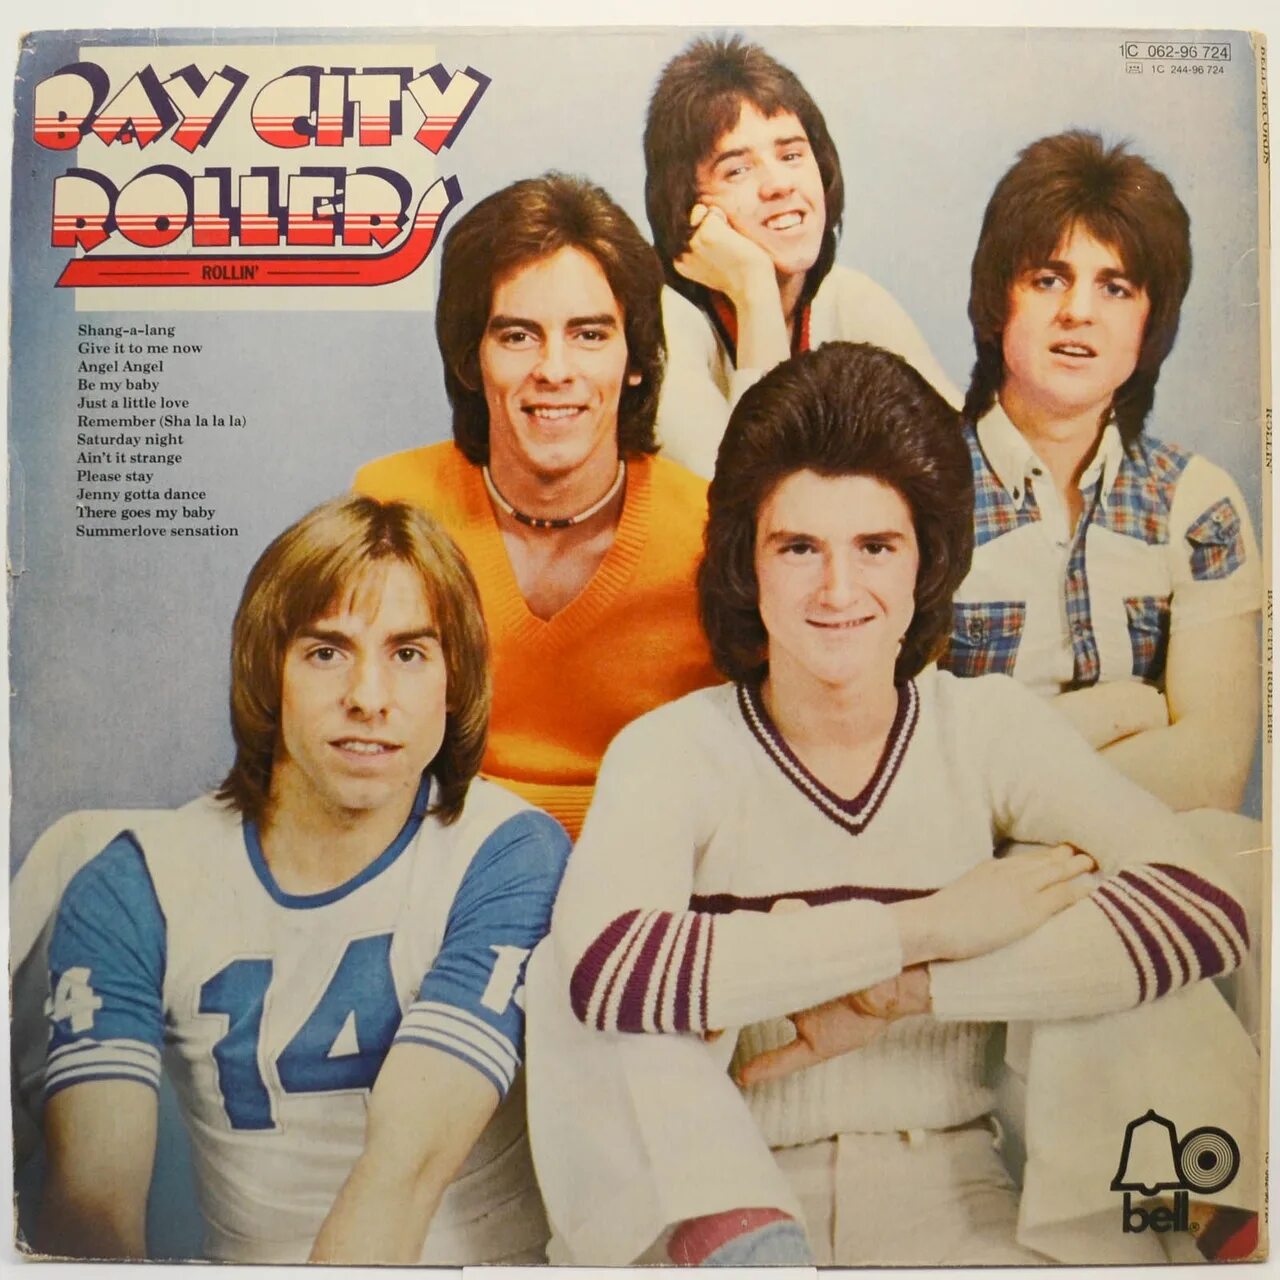 City roll. Bay City Rollers. Группа Bay City Rollers. Группа Bay City Rollers Англия фото. Bay City Rollers Ricochet 1981.